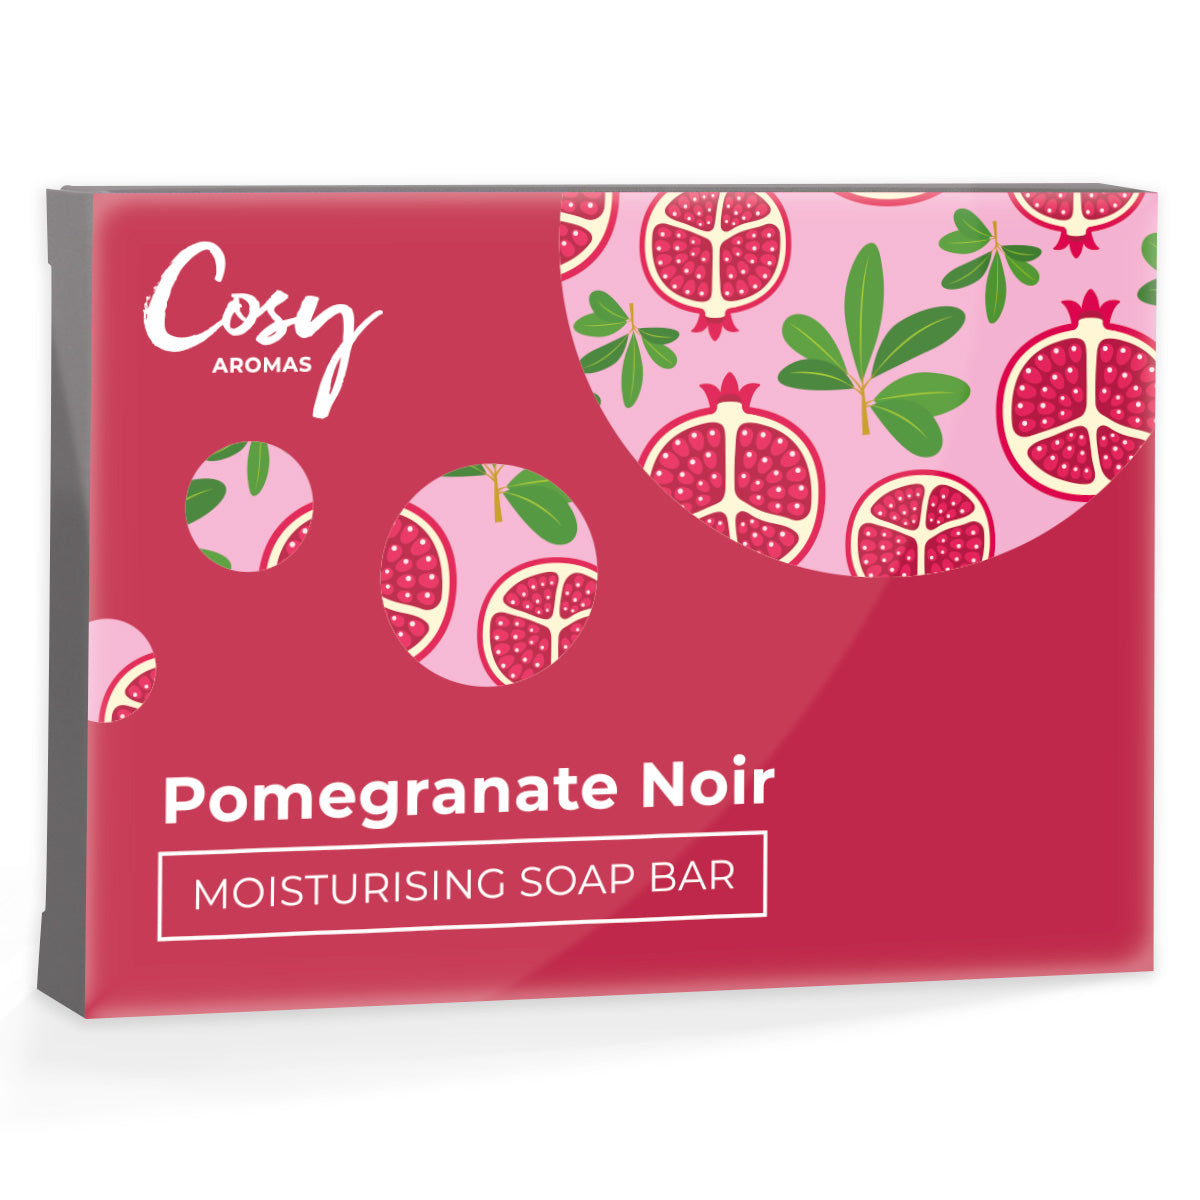 Pomegranate Noir Moisturising Soap Bar